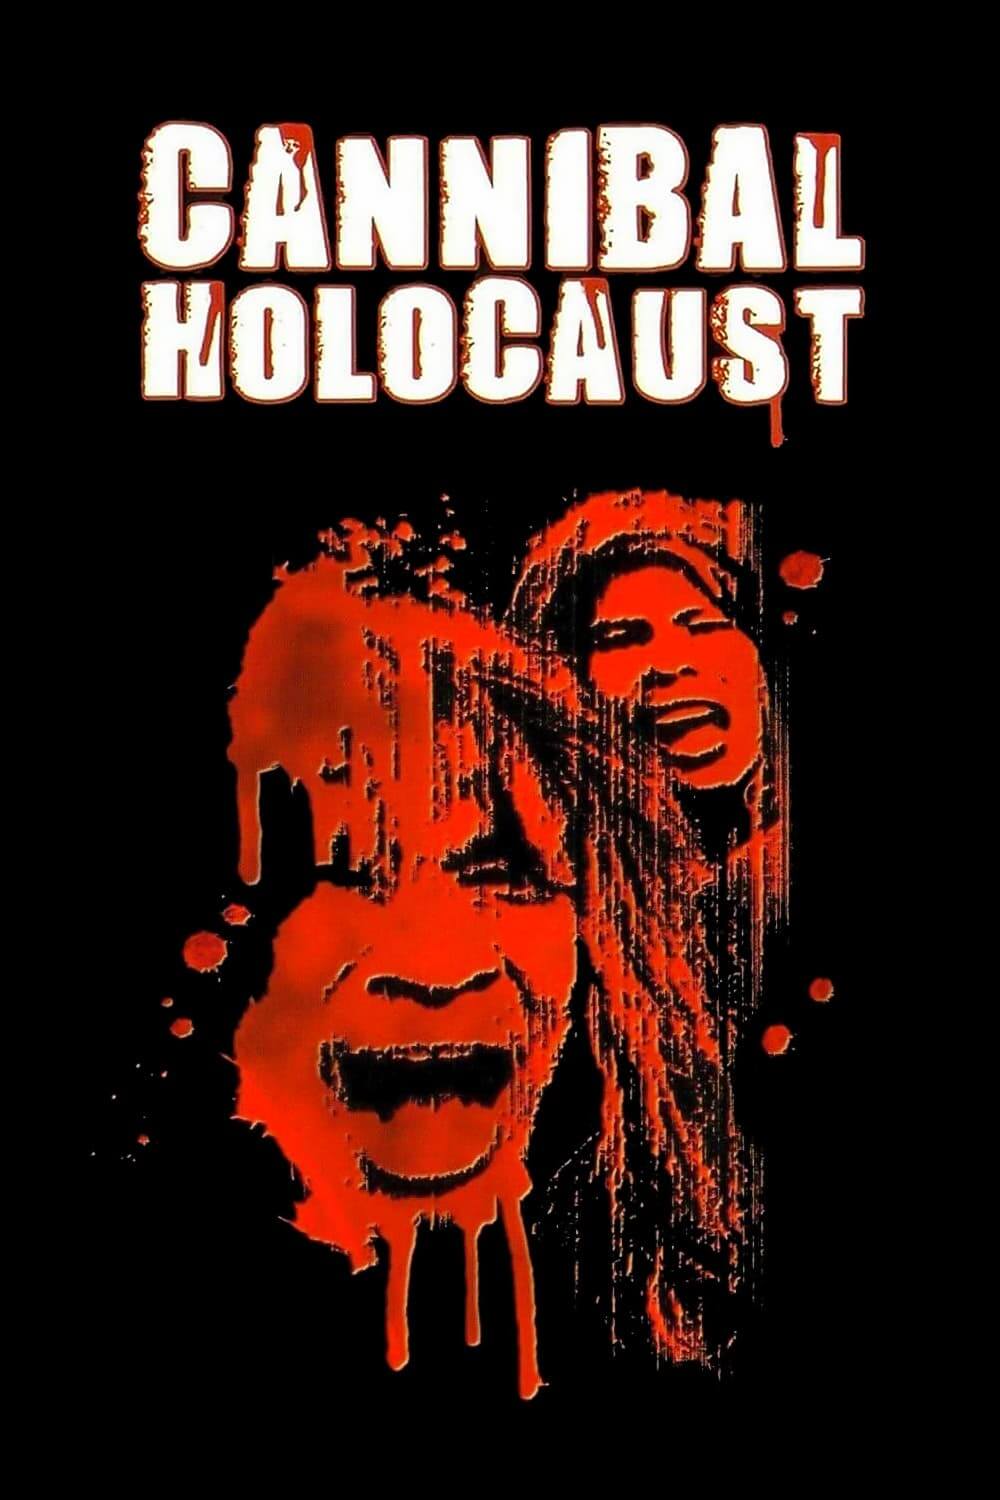 کانیبال هولوکاست (Cannibal Holocaust)